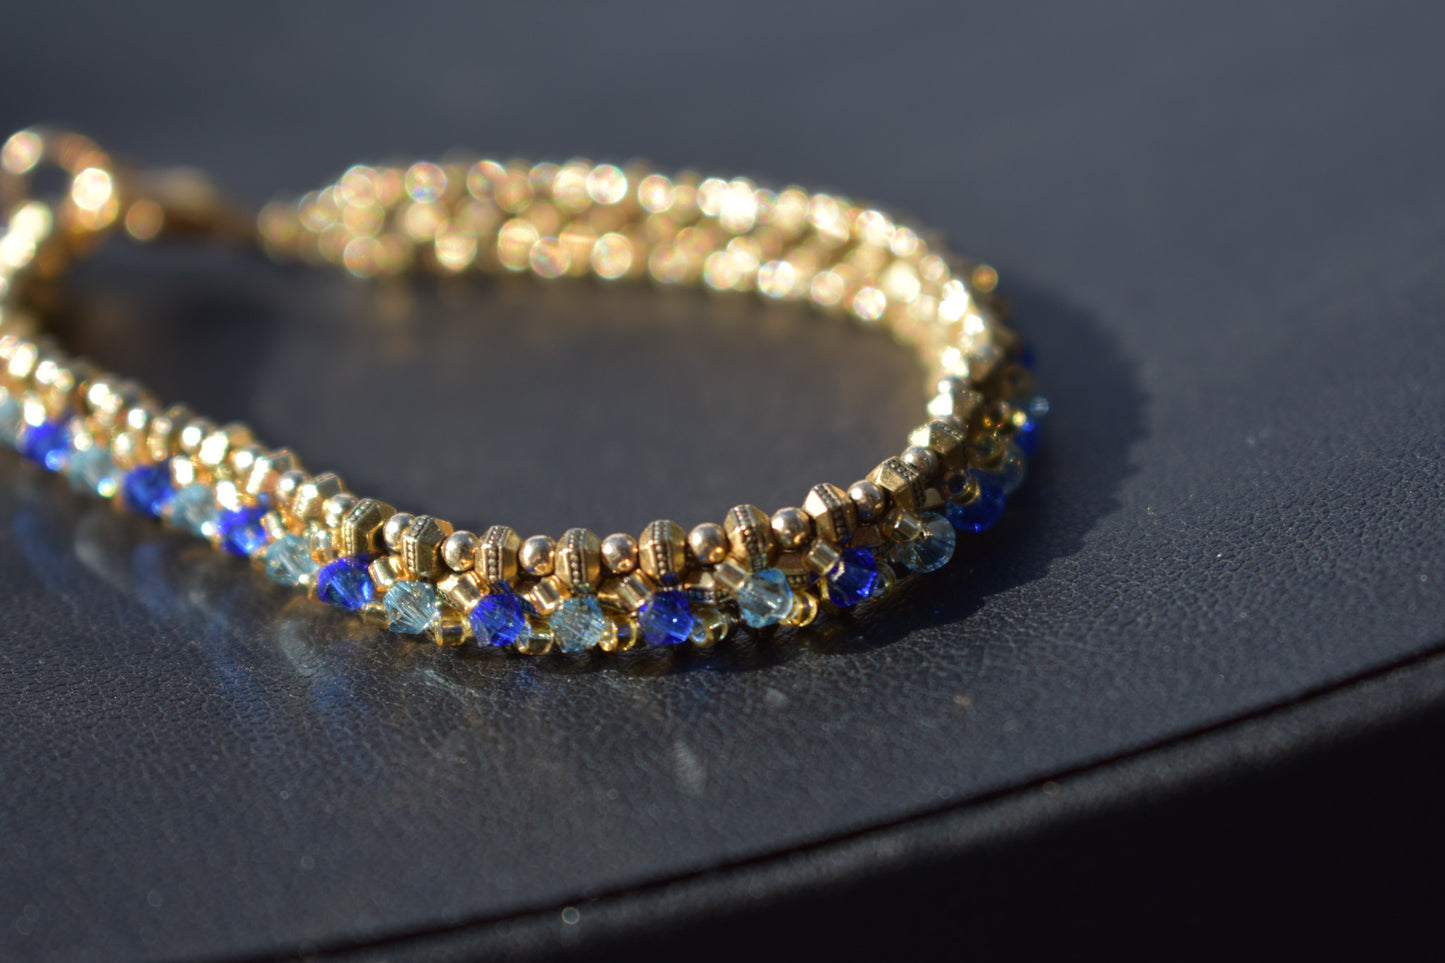 Gold and blue tennis bracelet